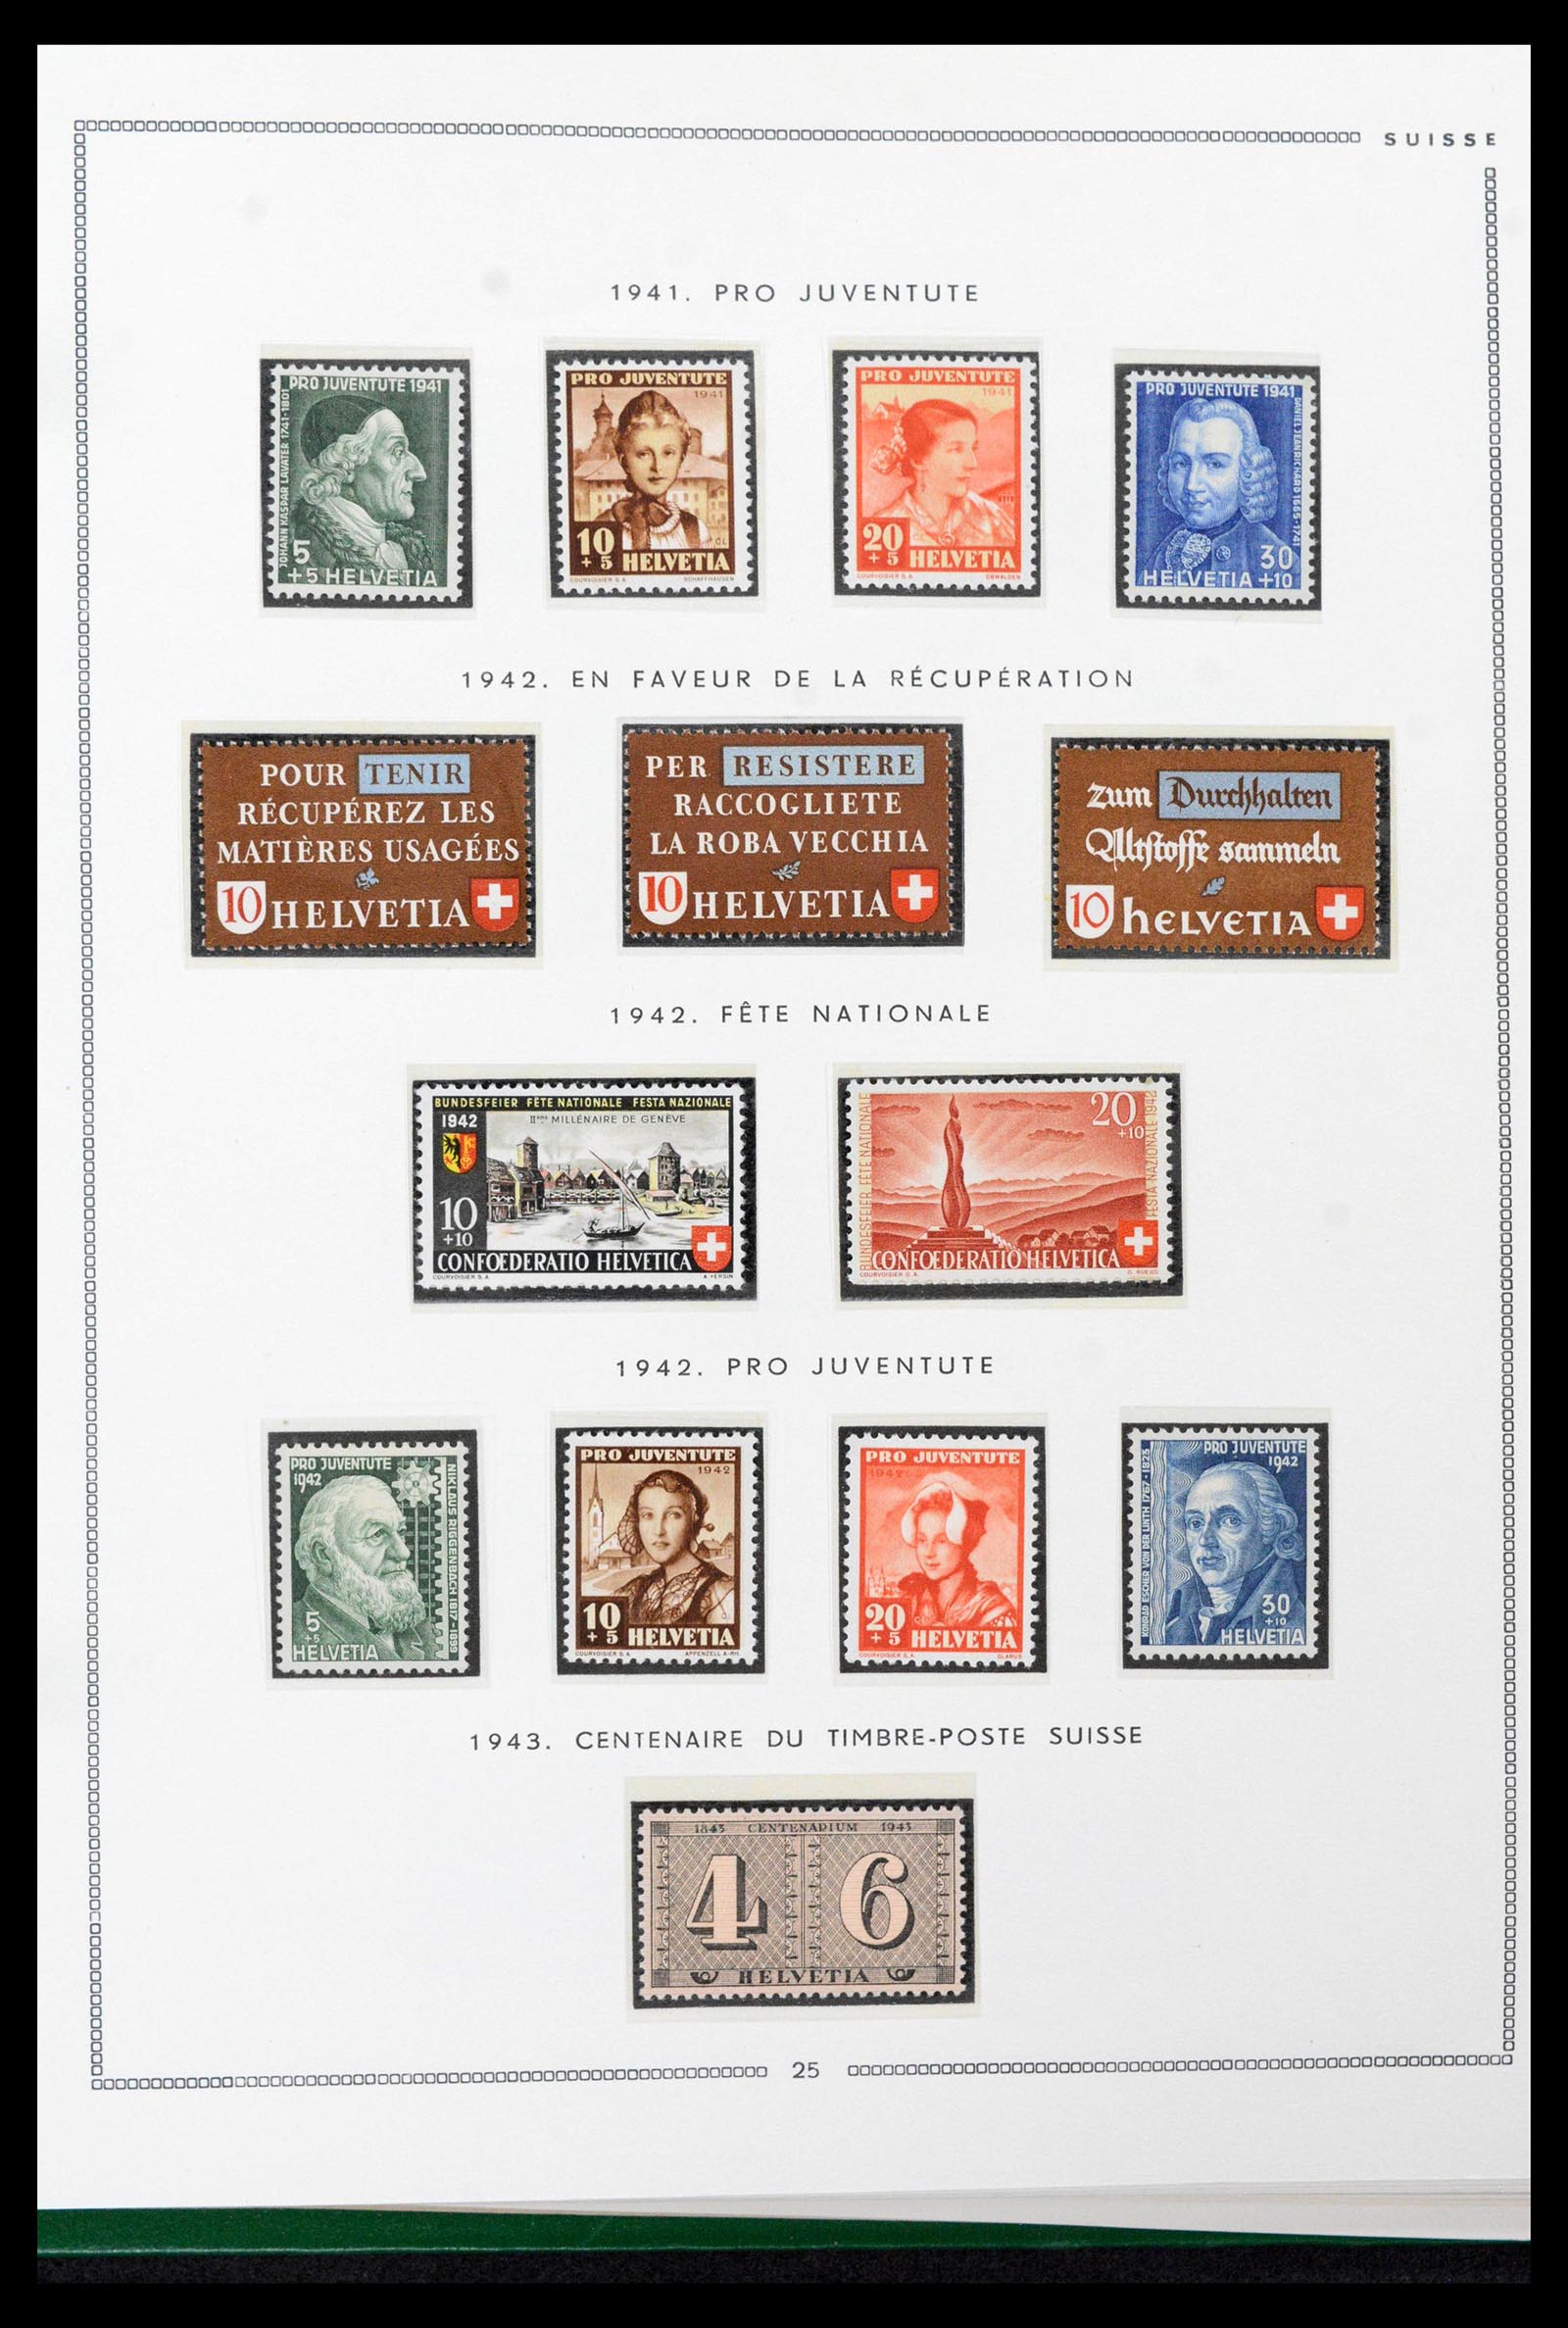 39096 0021 - Stamp collection 39096 Switzerland 1907-1963.